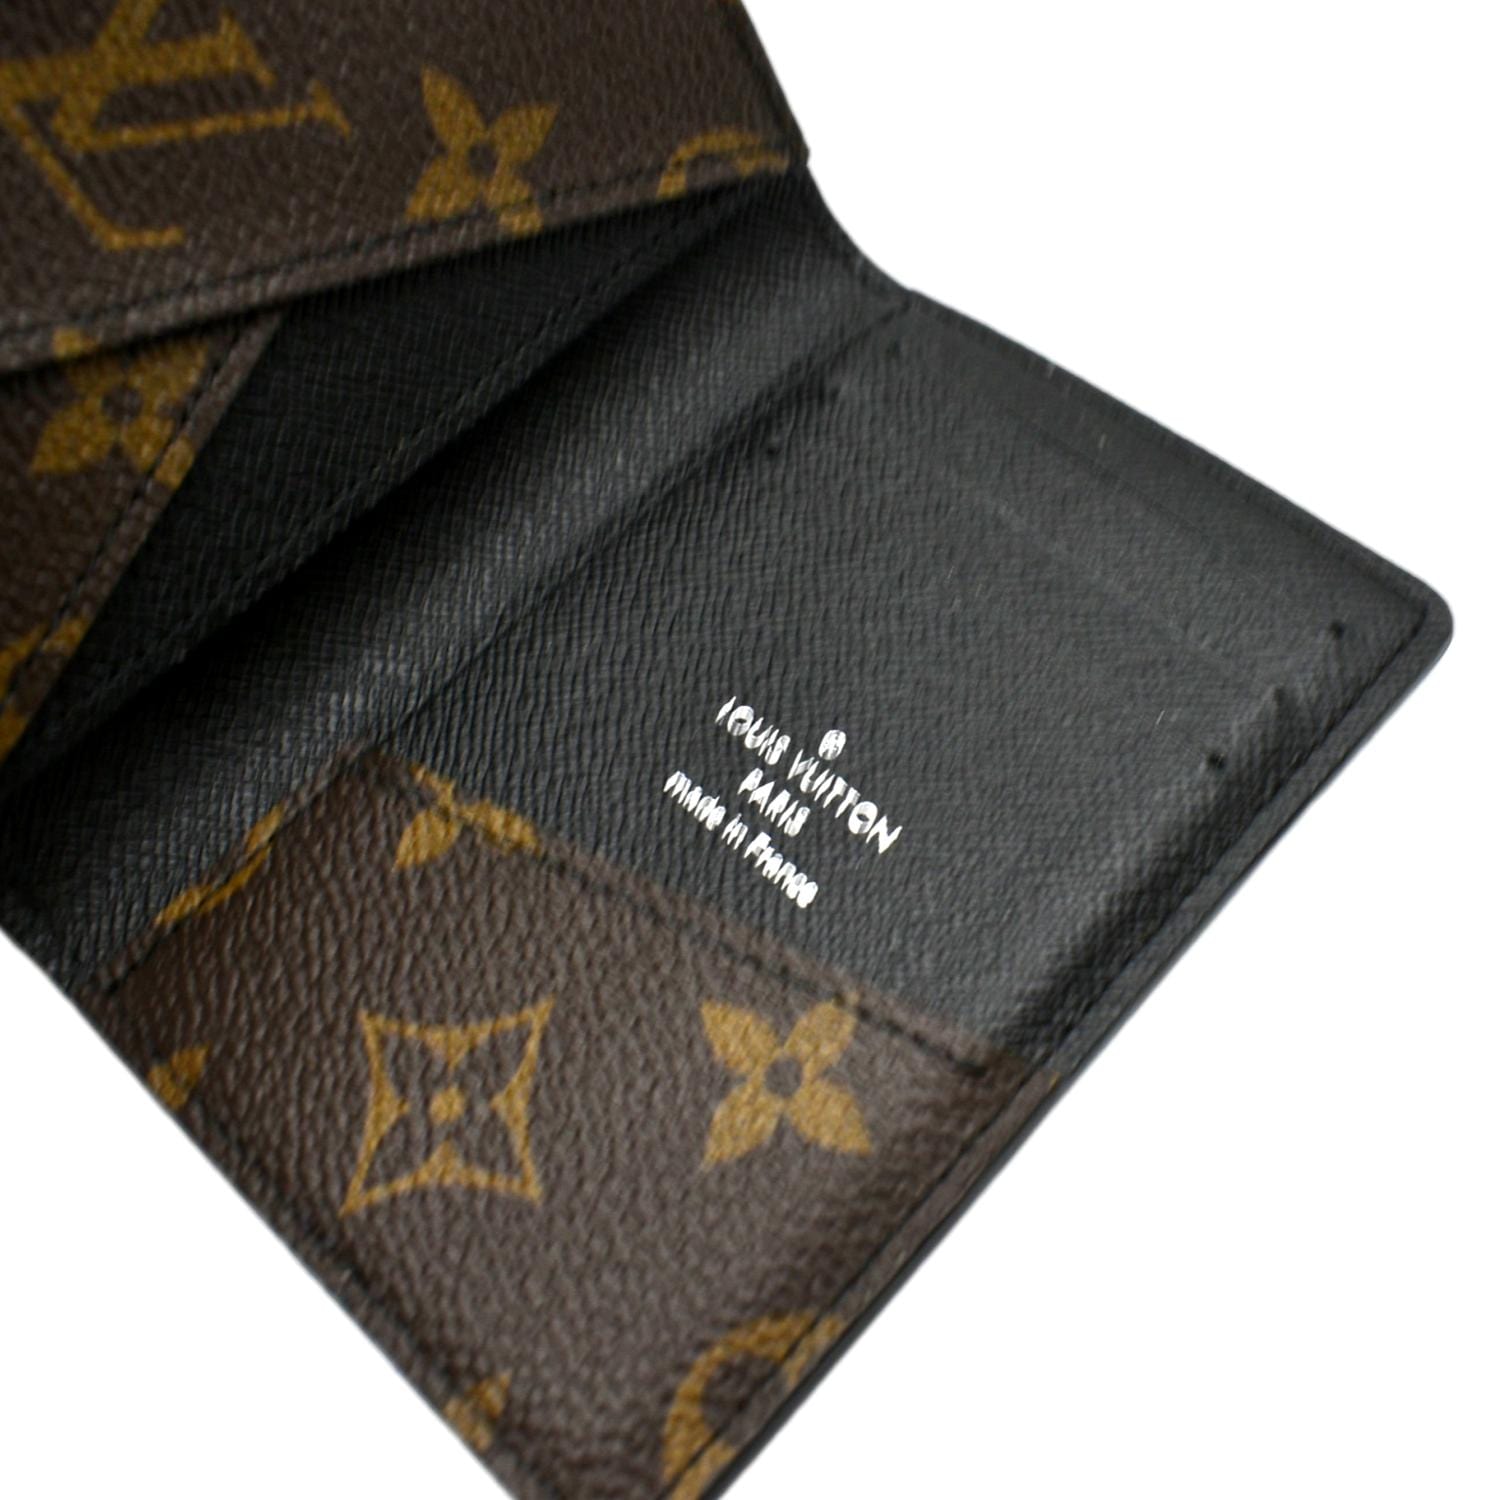 Pre-owned Louis Vuitton Pocket Organizer Monogram Eclipse Black